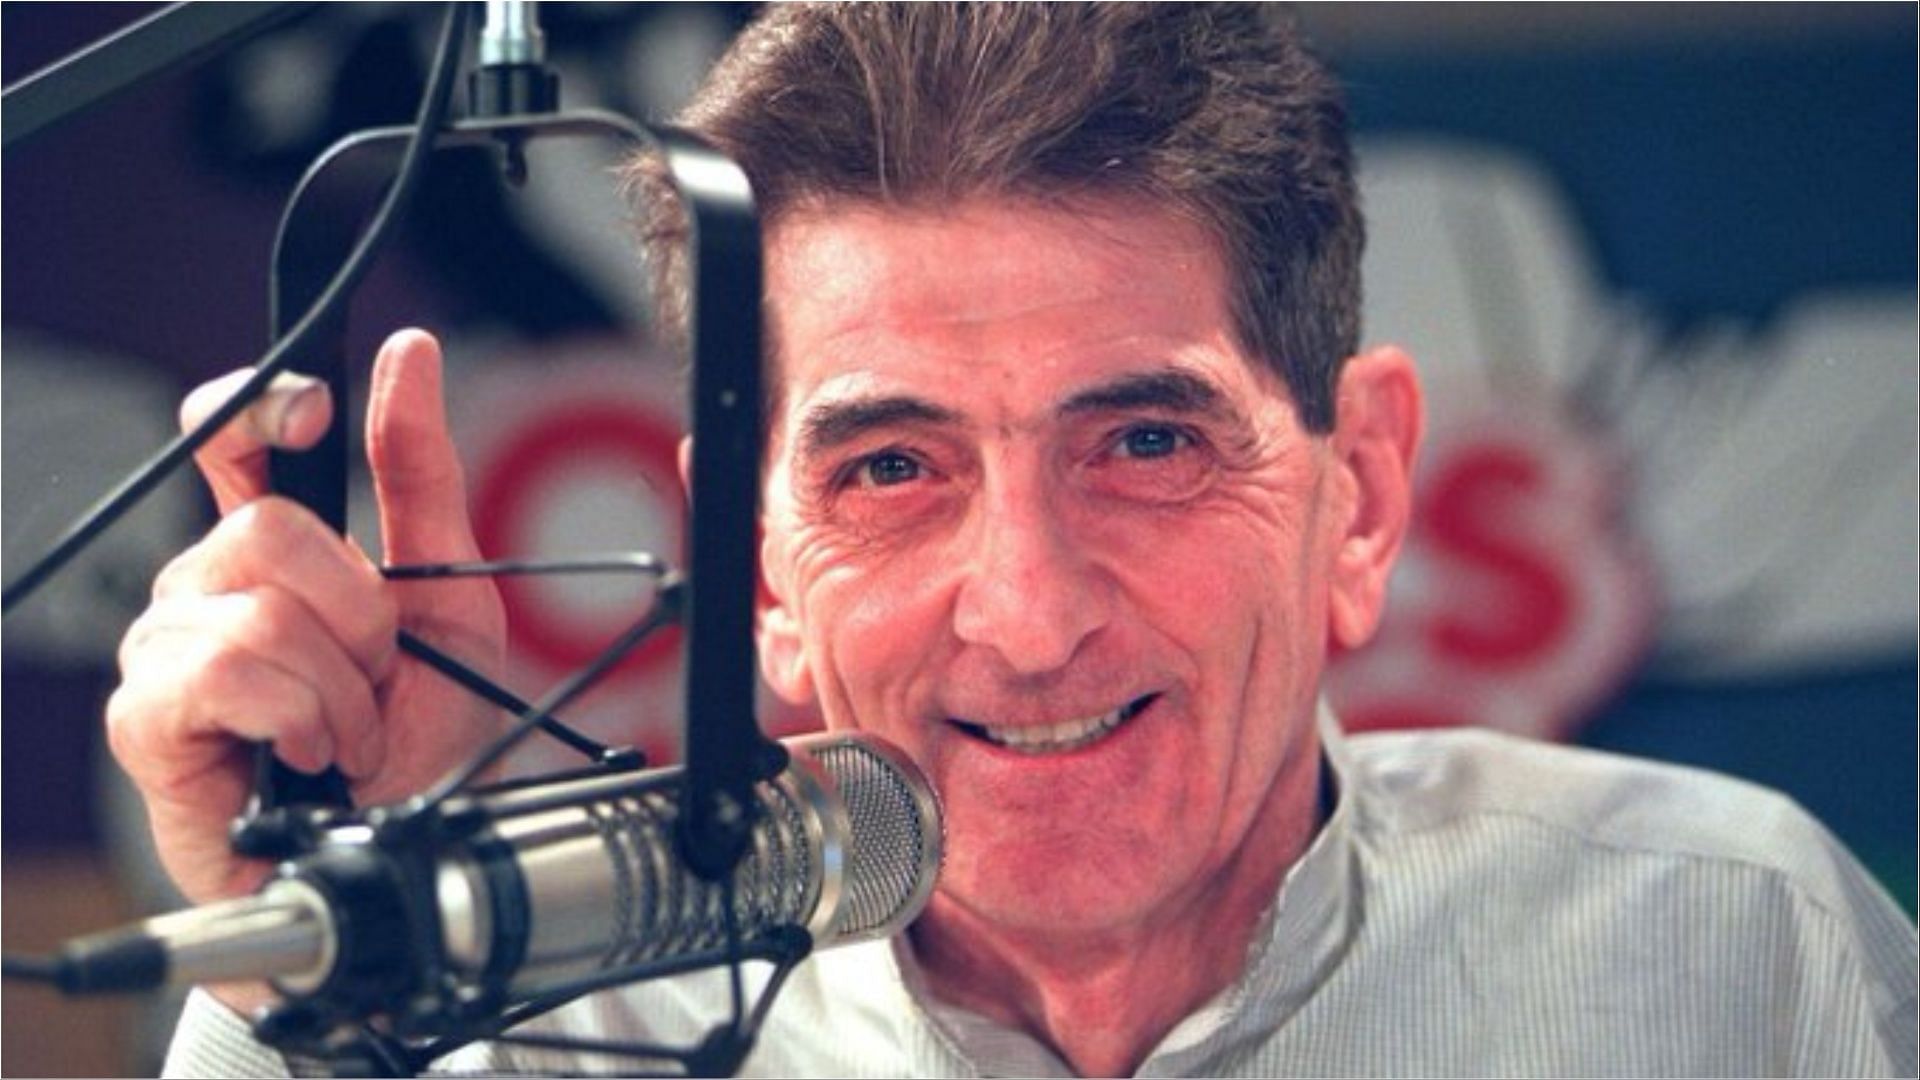 Dick Biondi worked in around 25 radio stations over the years (Image via Twitter/ @radiojoecicero)